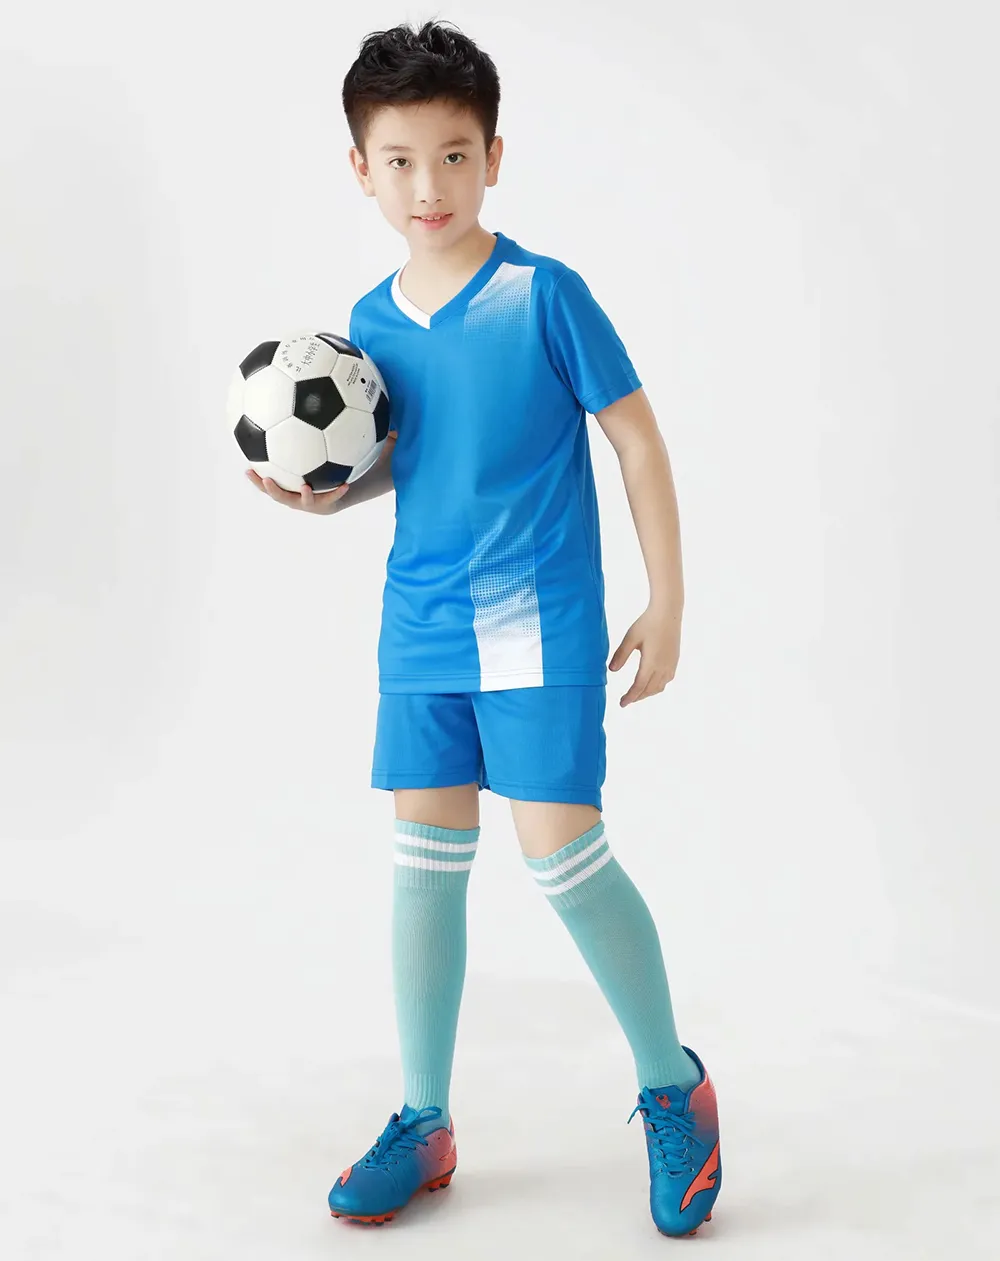 Jessie_kicks #G461 LJR aiir joordan 5 Design 2021 Modetröjor Barnkläder Ourtdoor Sport